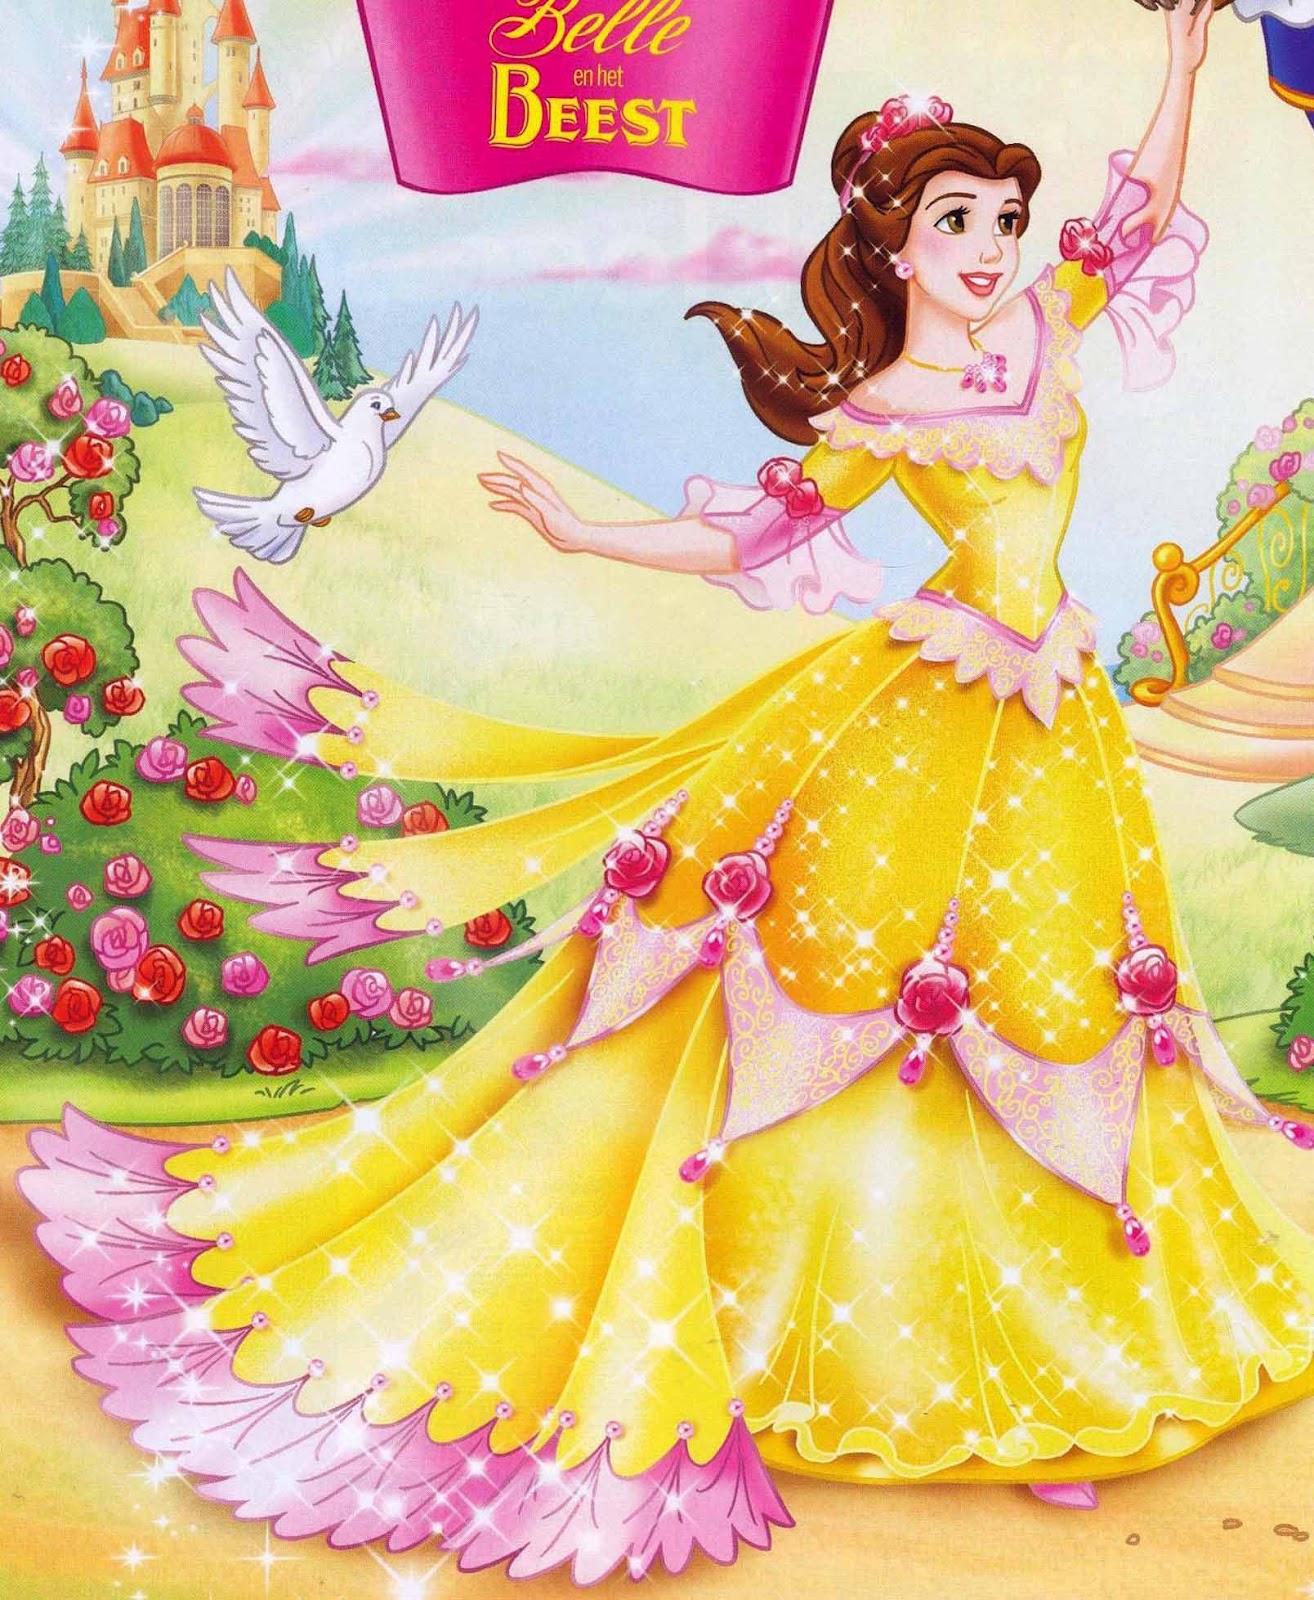 Disney Princess Belle Christmas Day Wallpaper